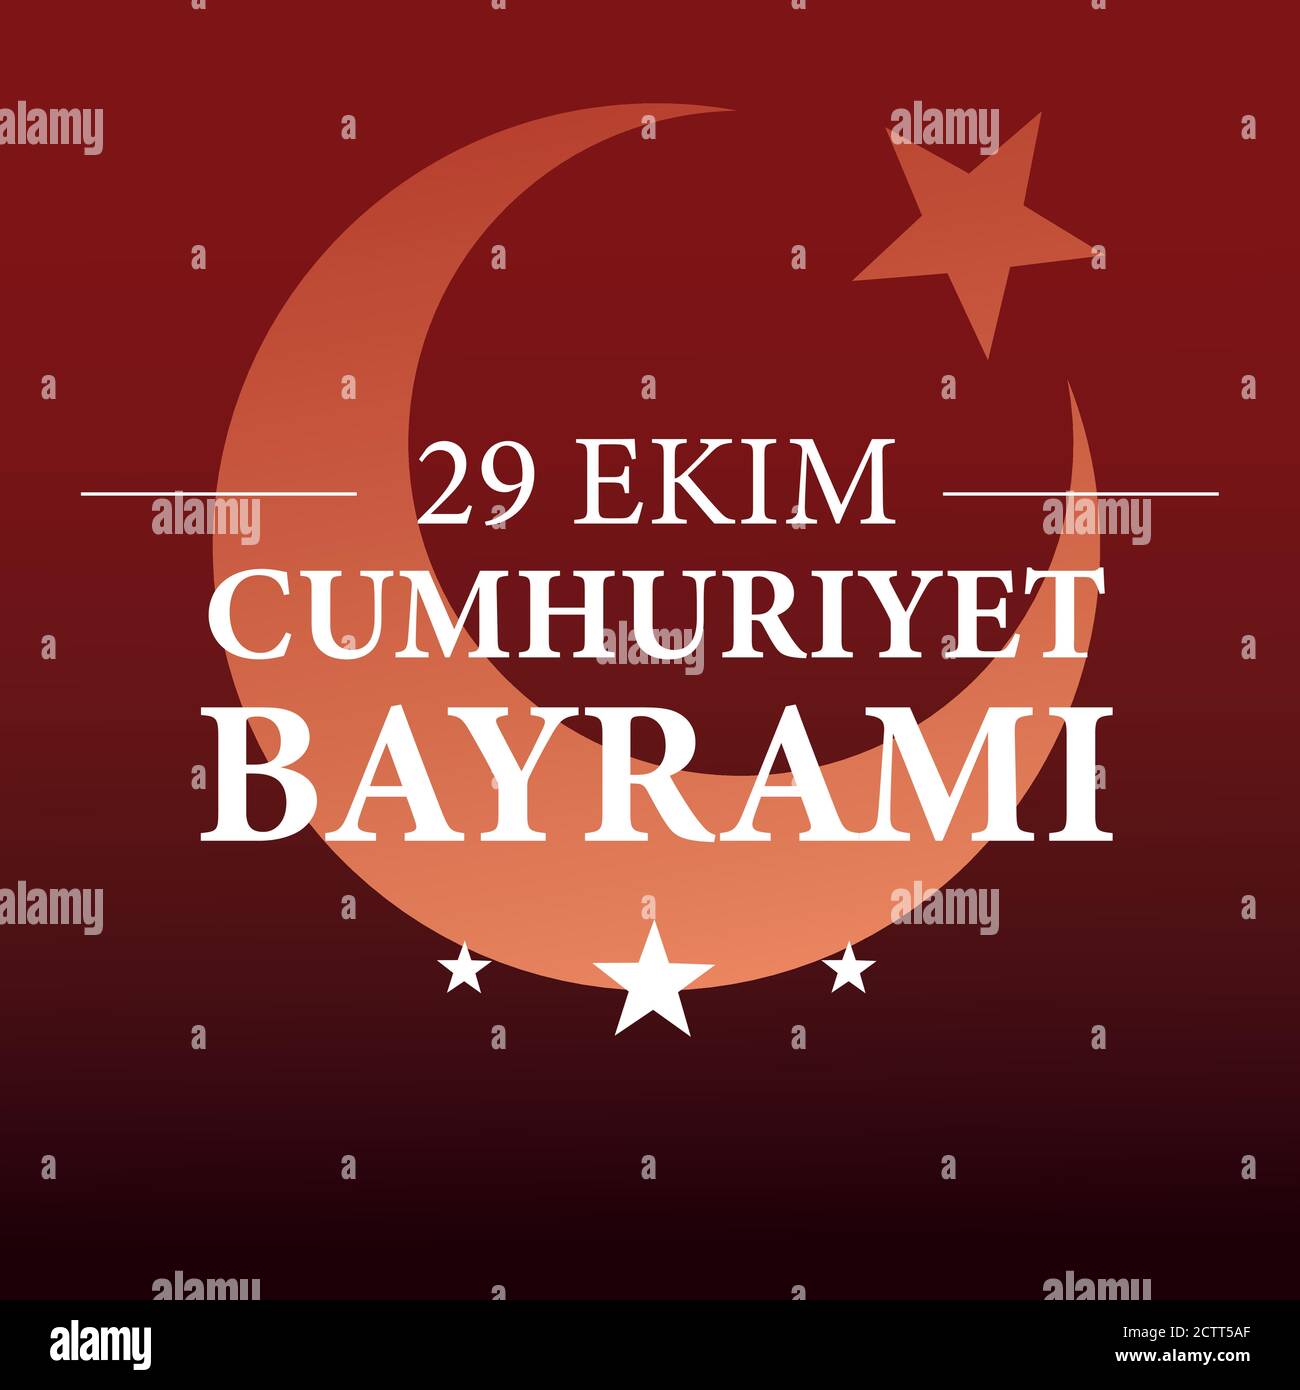 29 ekim cumhuriyet bayrami with turkish moon with star design, Turkey and republic theme Vector illustration Stock Vector